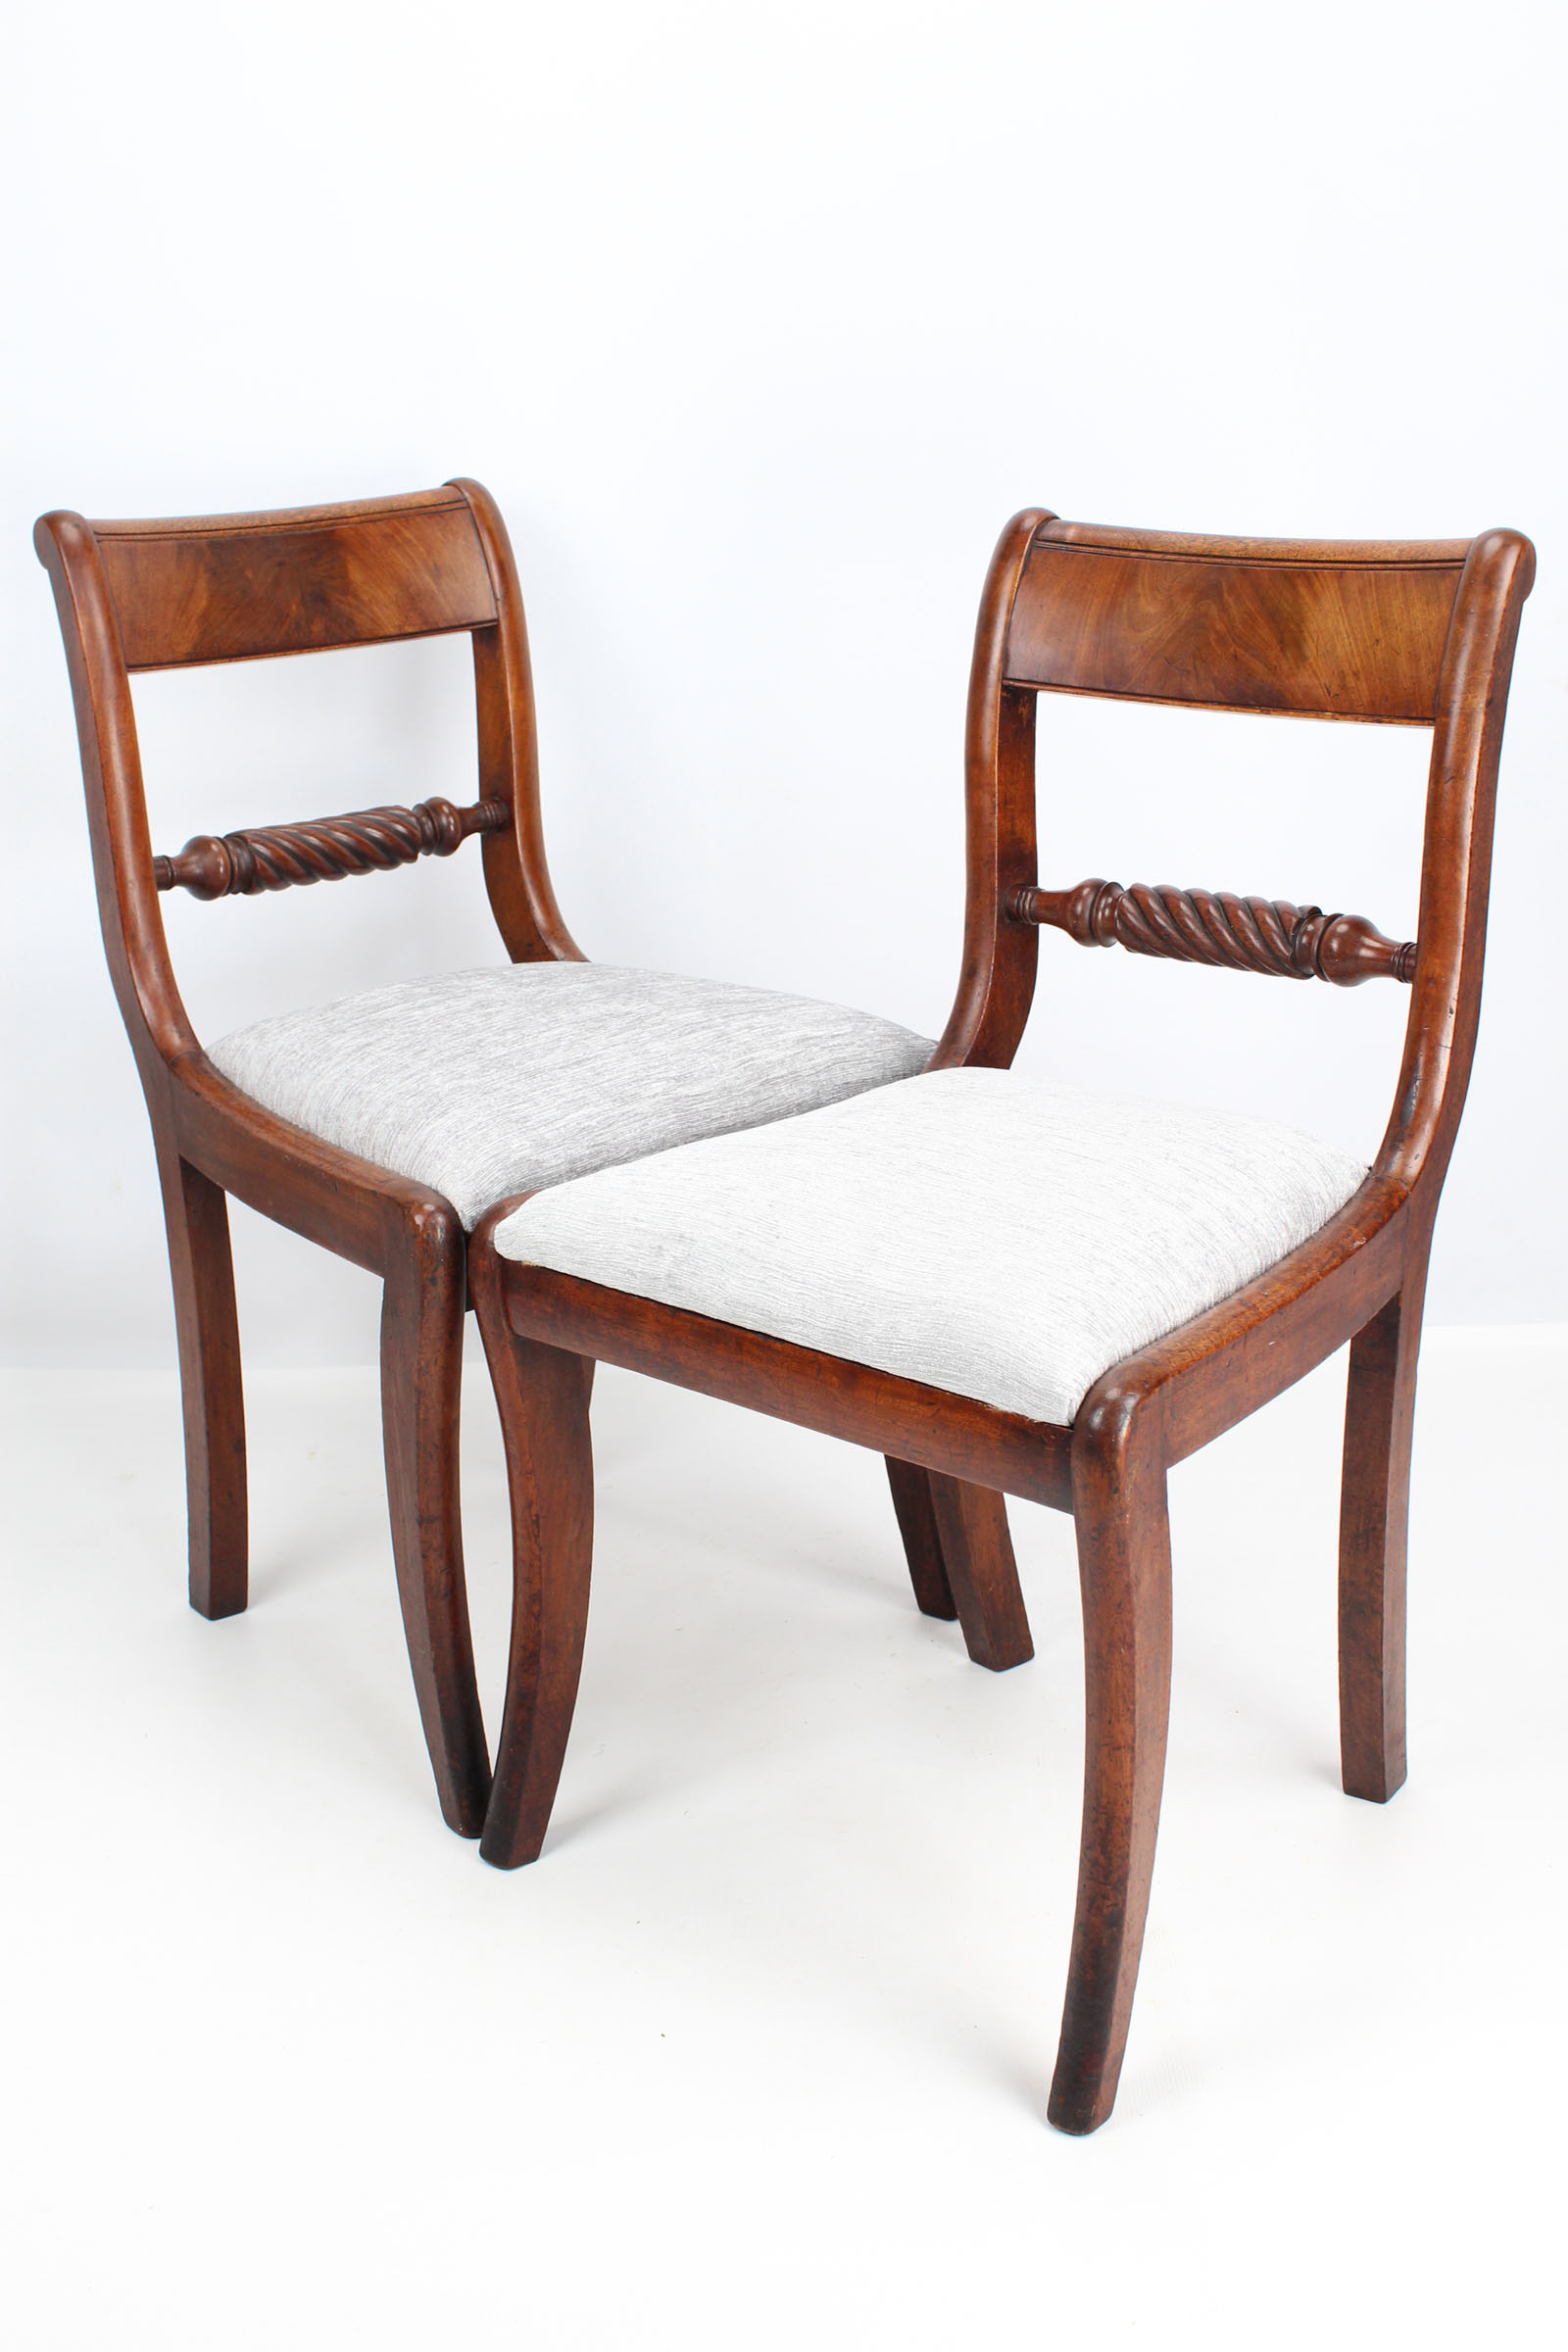 Pair Antique Regency Mahogany Rope-Twist Chairs